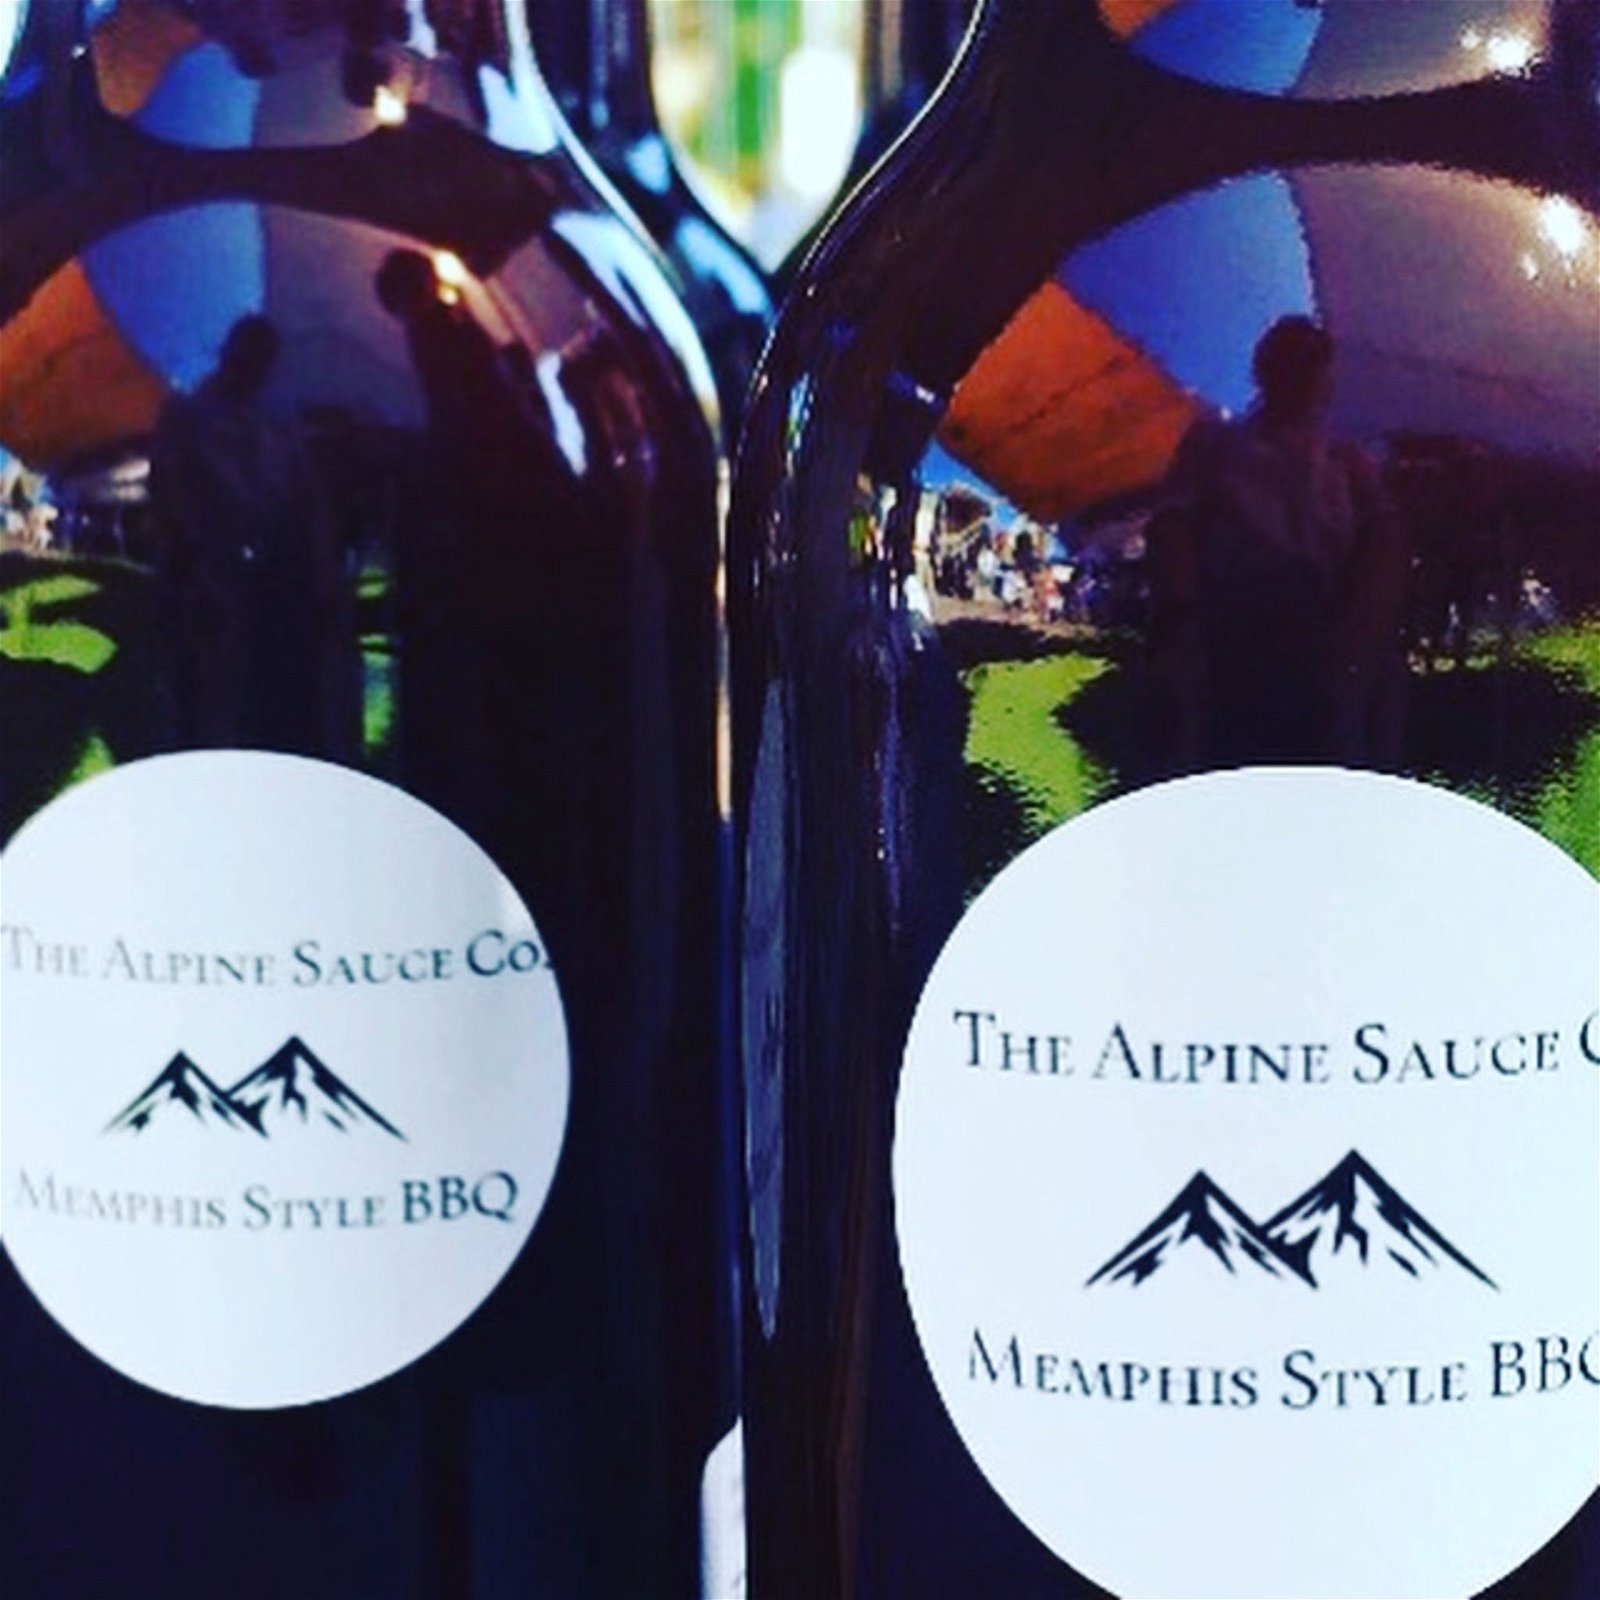 The Alpine Sauce Co - Pubs Sydney